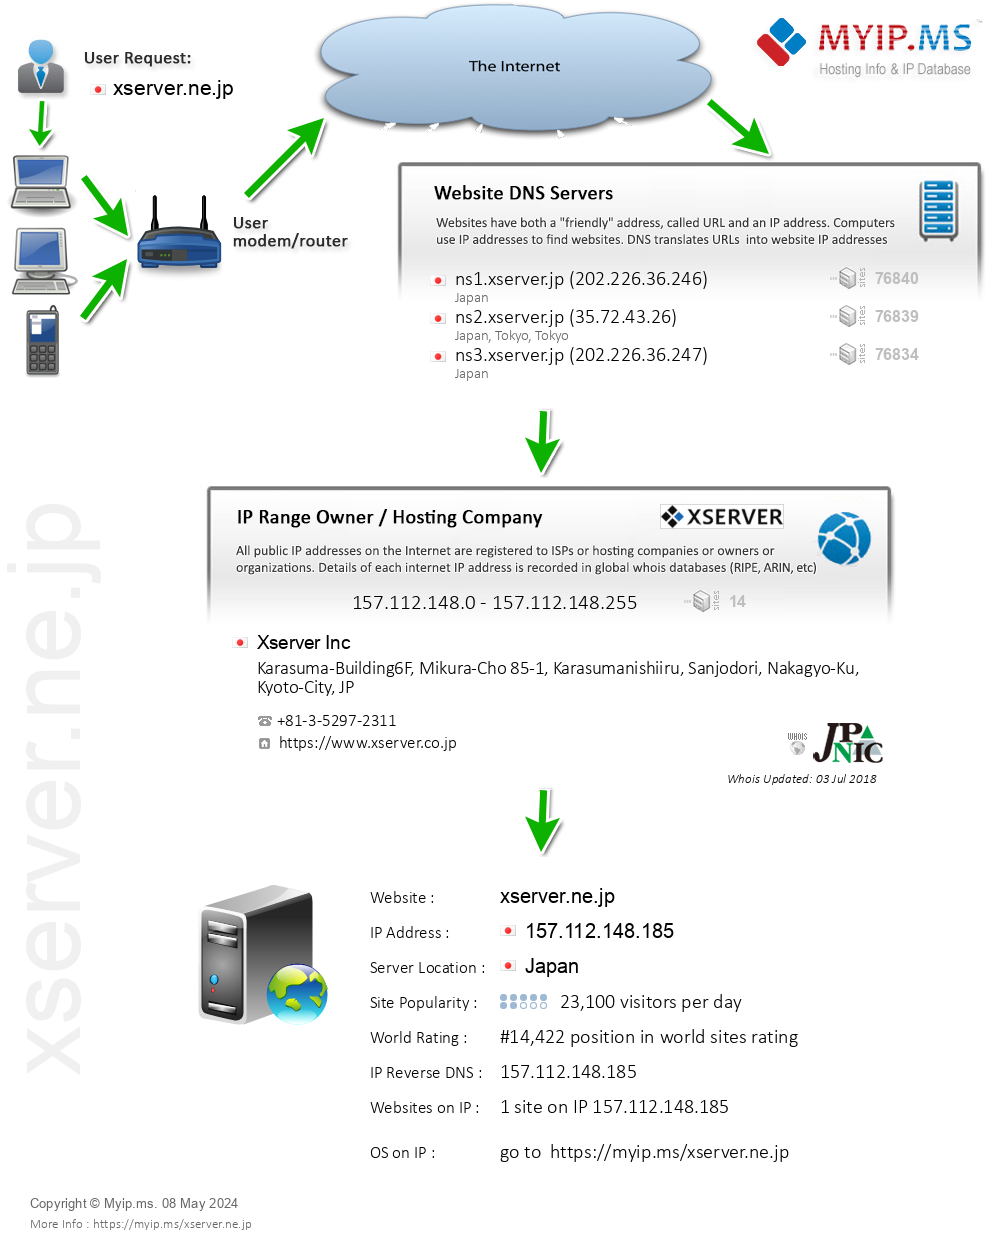 Xserver.ne.jp - Website Hosting Visual IP Diagram